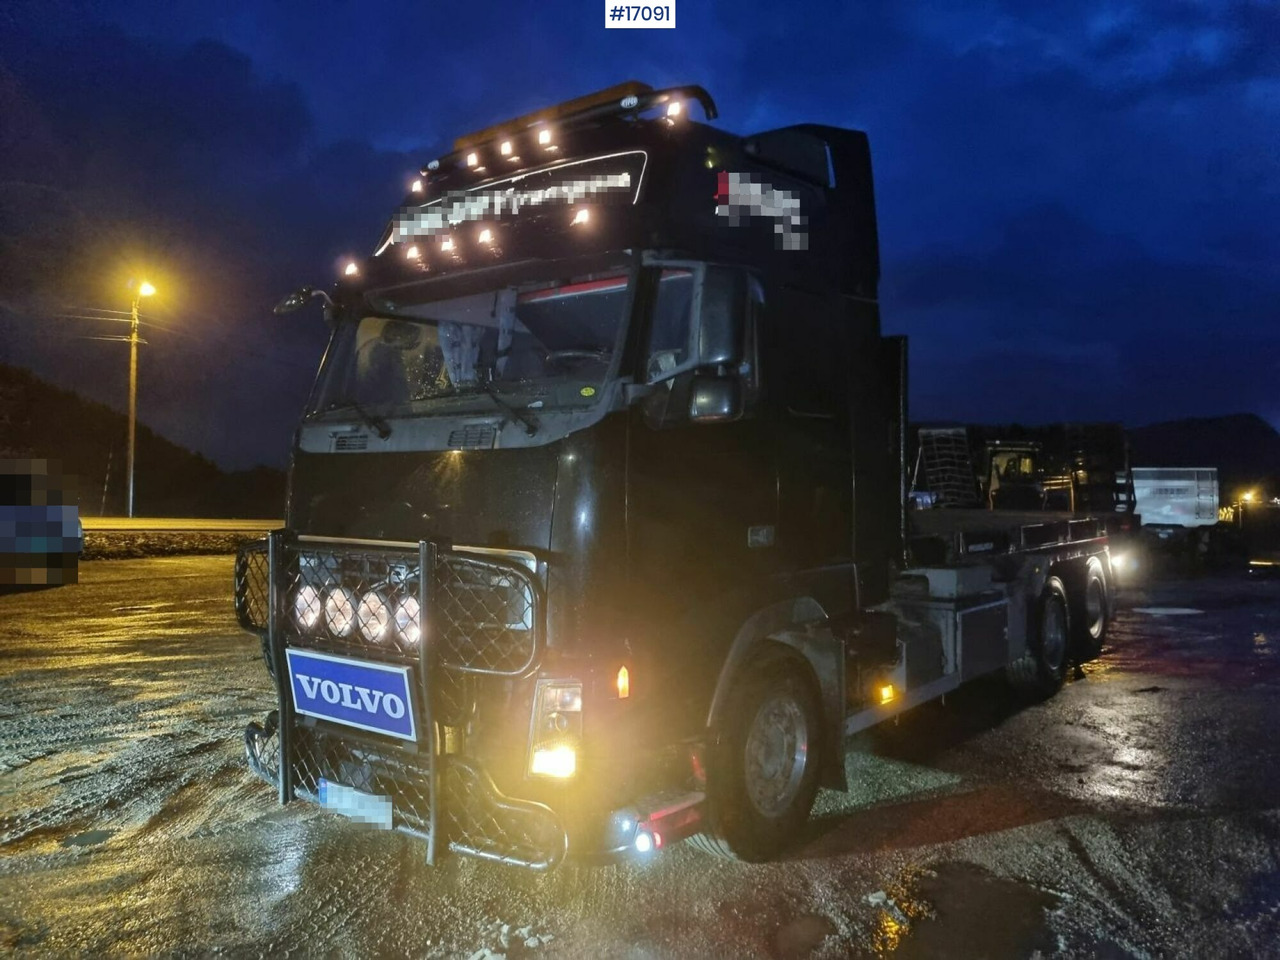 Haakarmsysteem vrachtwagen Volvo FH 480: afbeelding 2